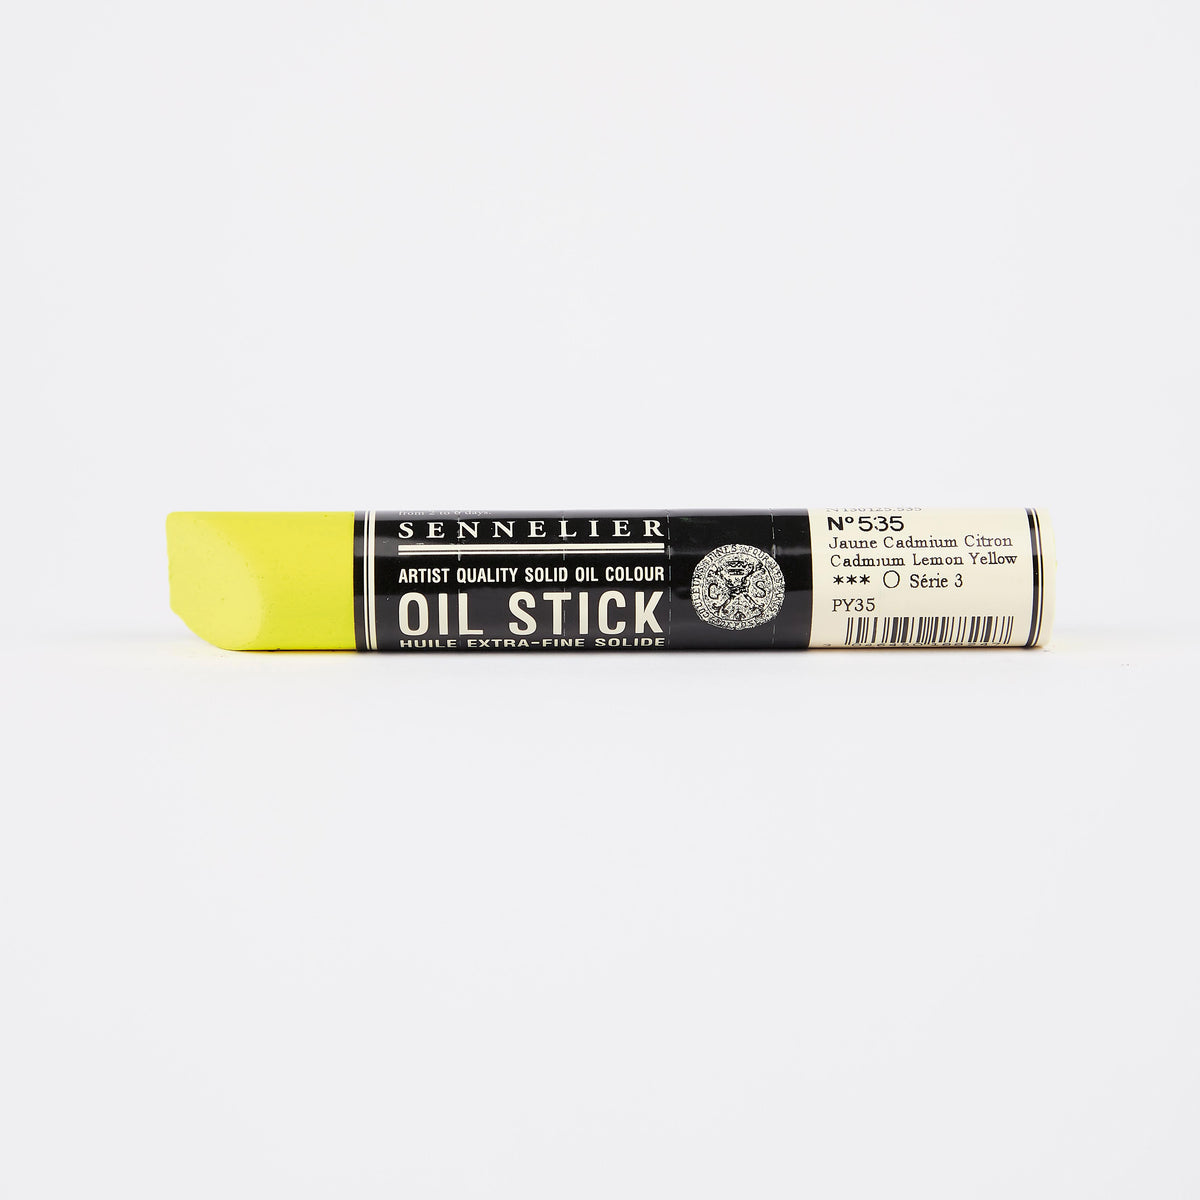 Sennelier Oil Stick 38ml Cadmium lemon yellow S3